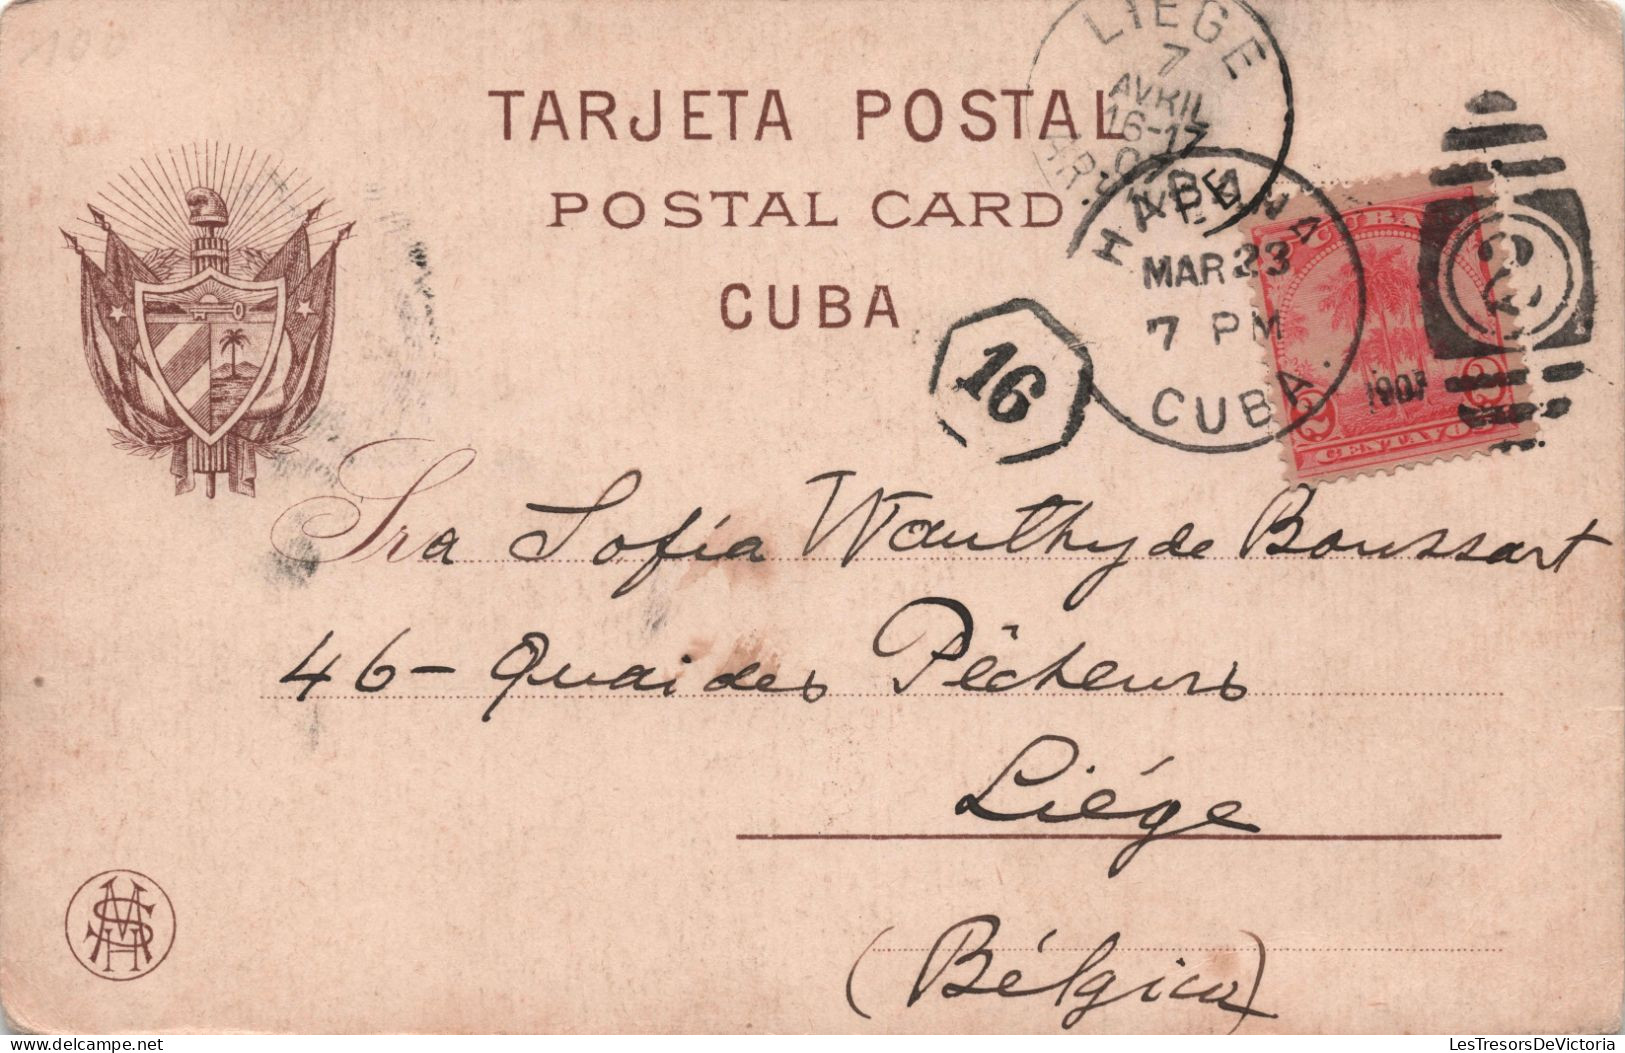 Antilles - CUBA - Habana Escogida De Pinas - Pineapple Choice - Edicion Jordi - Carte Postale Ancienne - Kuba